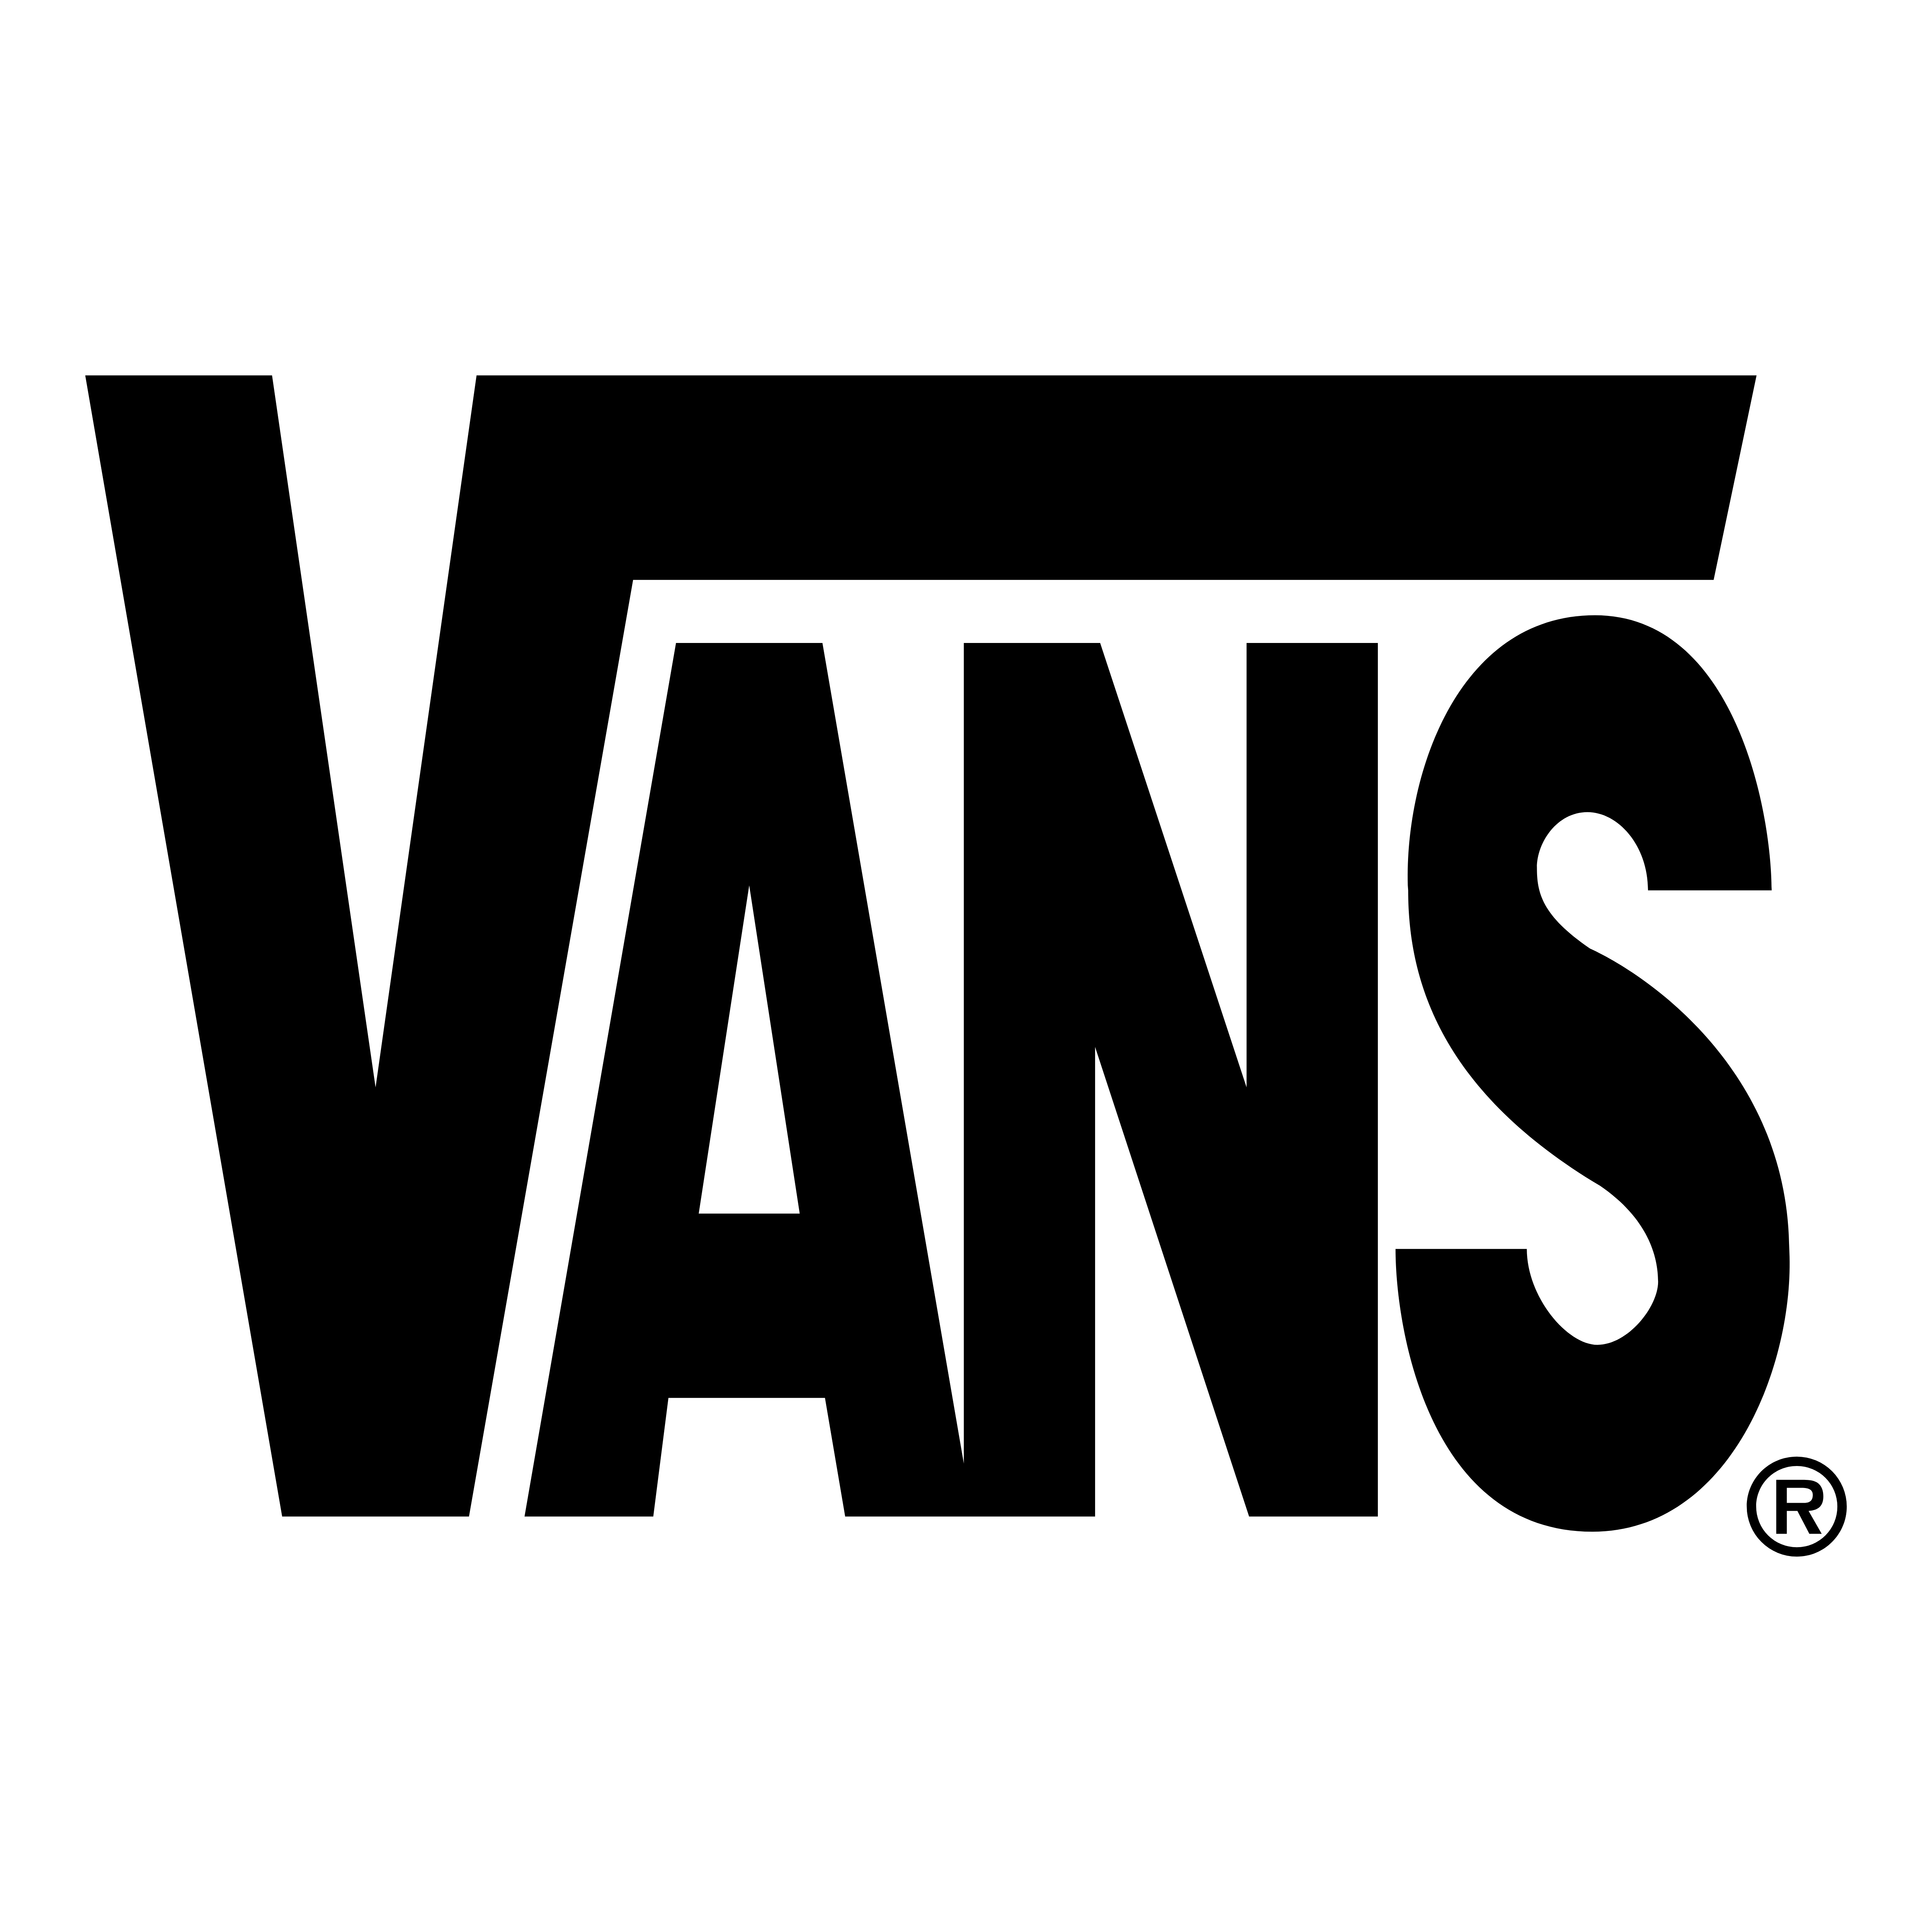 Vans - Logos Download